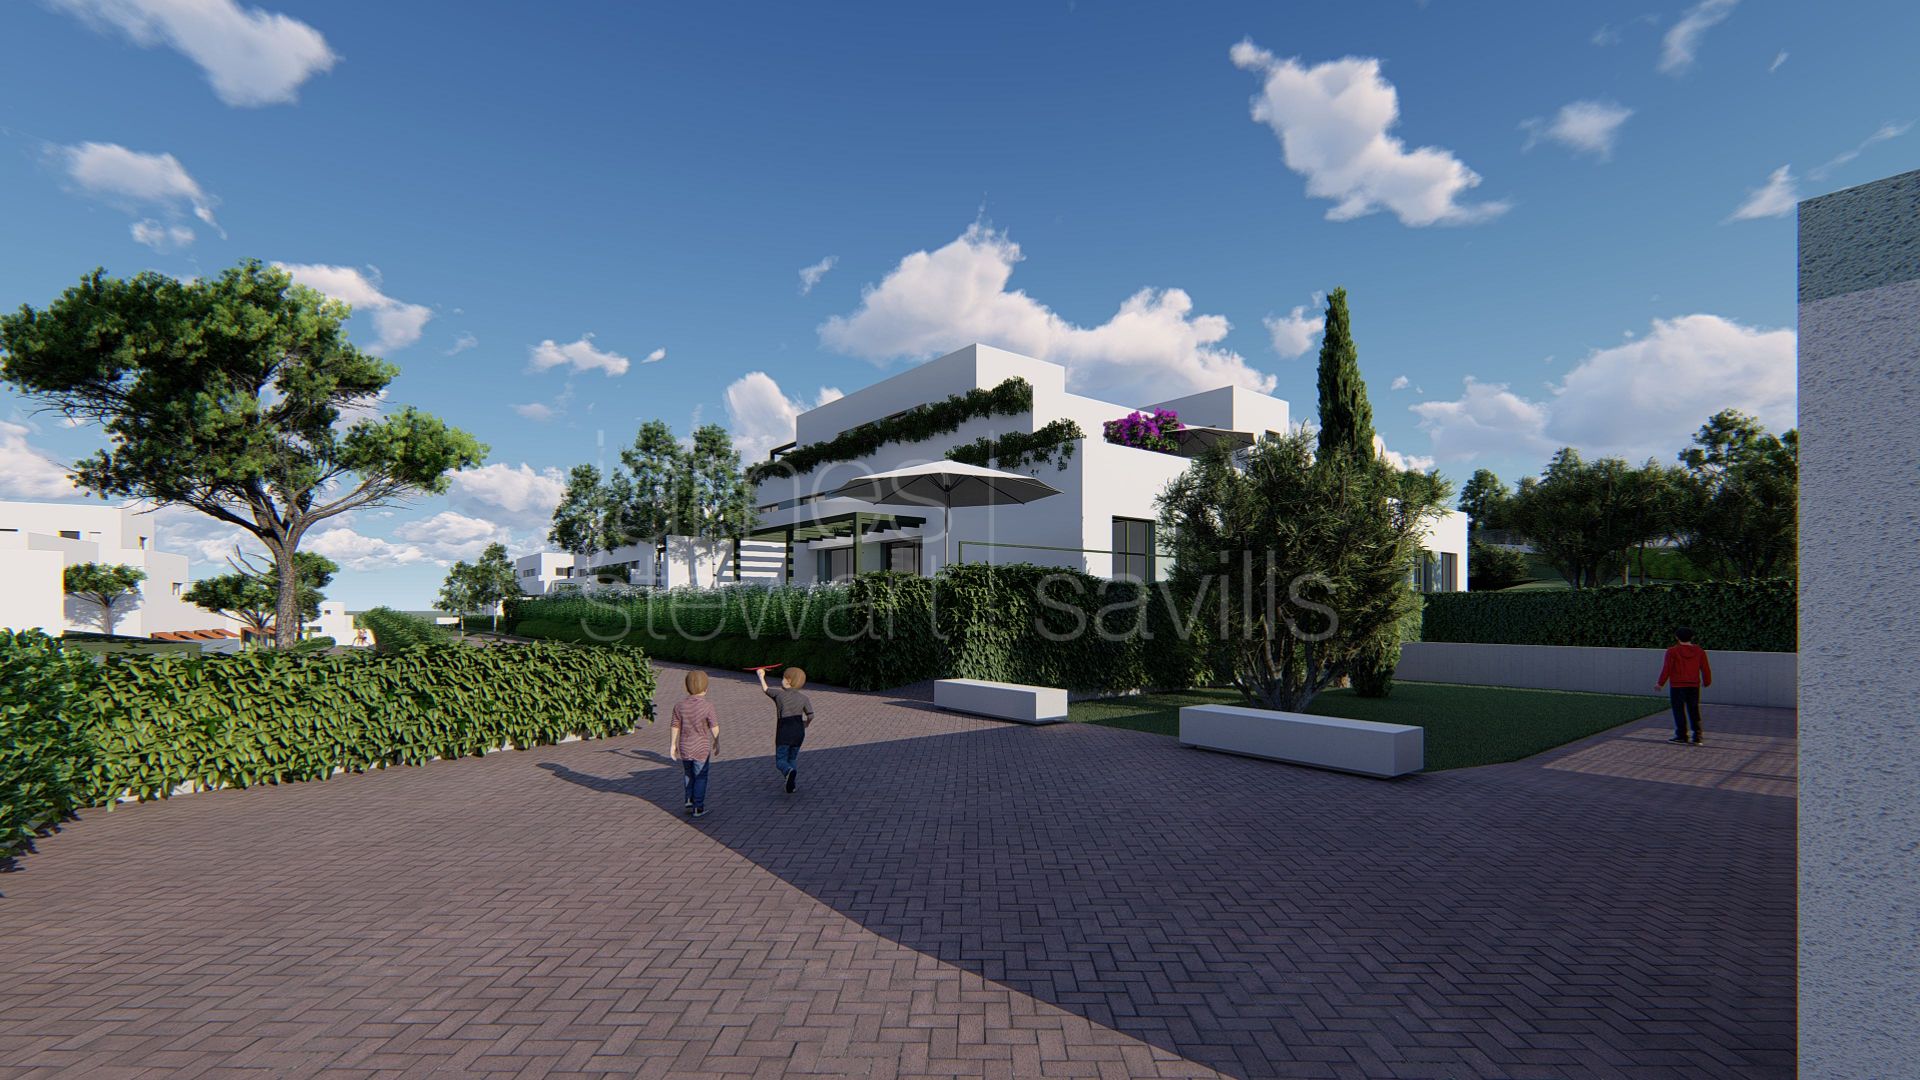 SENDA CHICA - new contemporary gated community within Sotogrande € 404,000 plus VAT